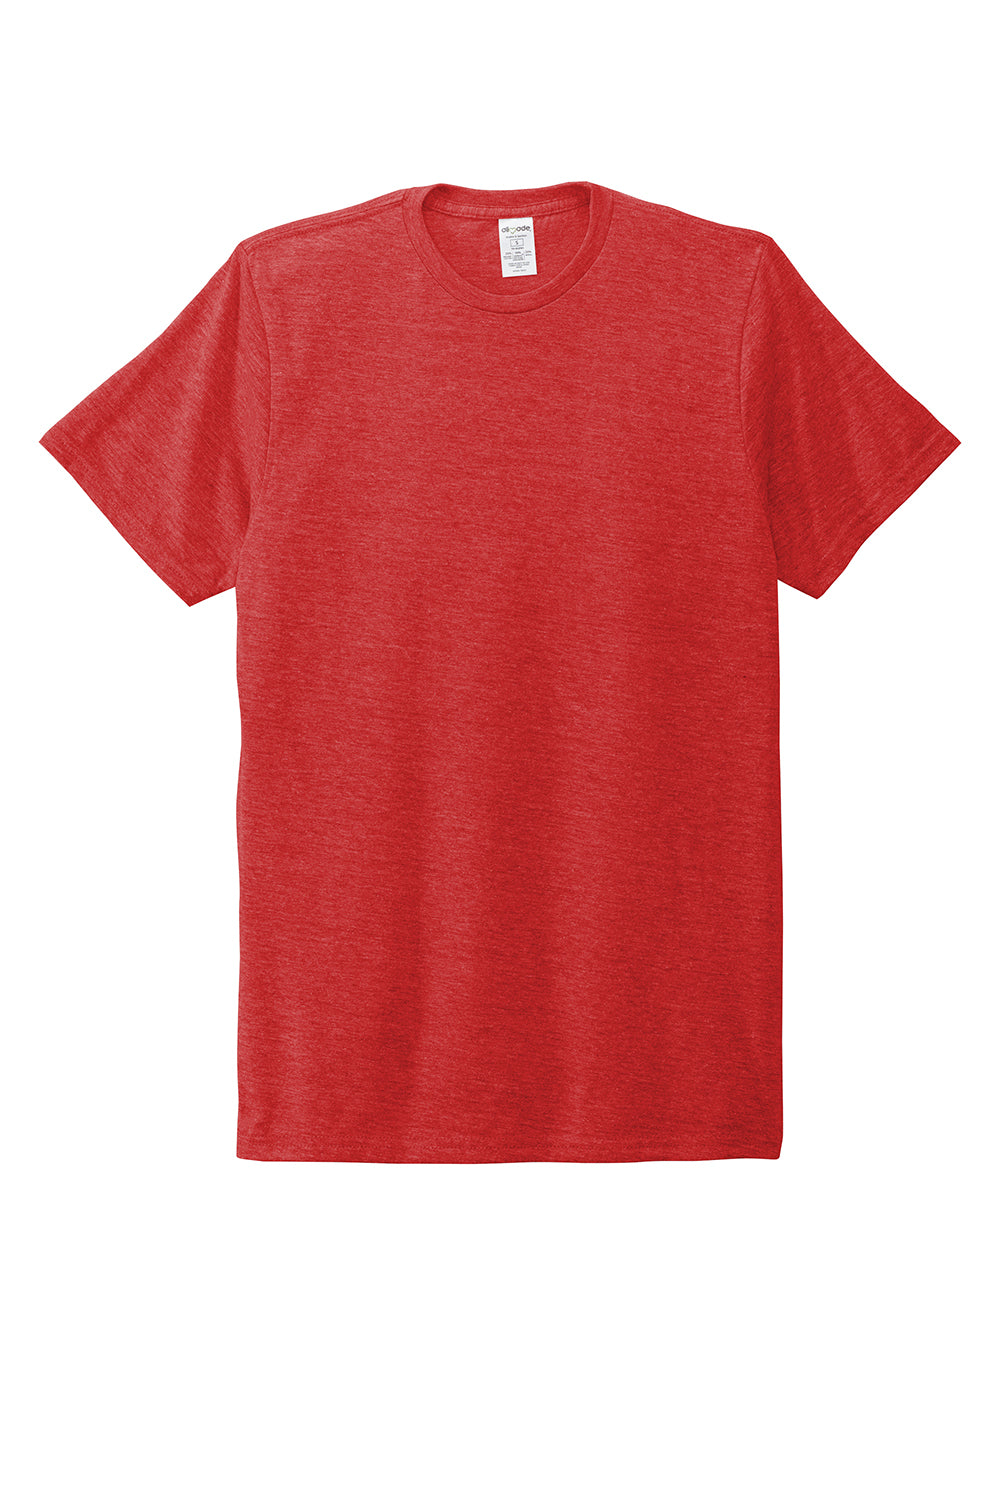 Allmade AL2004 Mens Short Sleeve Crewneck T-Shirt Rise Up Red Flat Front